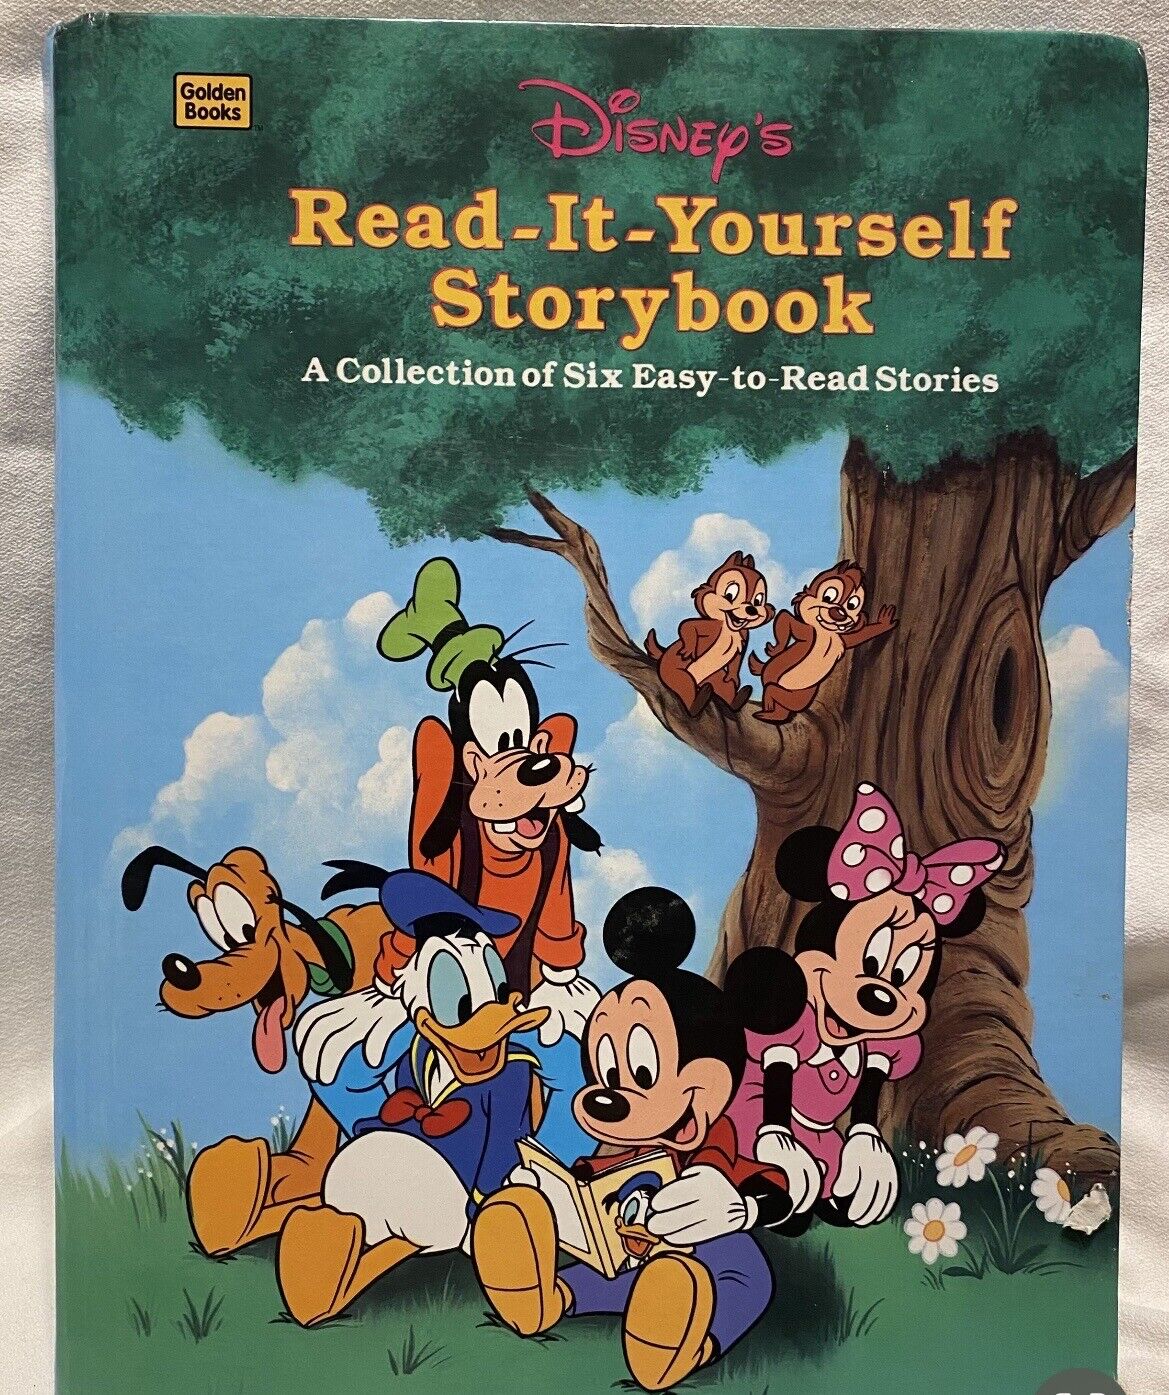 Golden Books Disneys READ IT YOURSELF STORYBOOK  1991